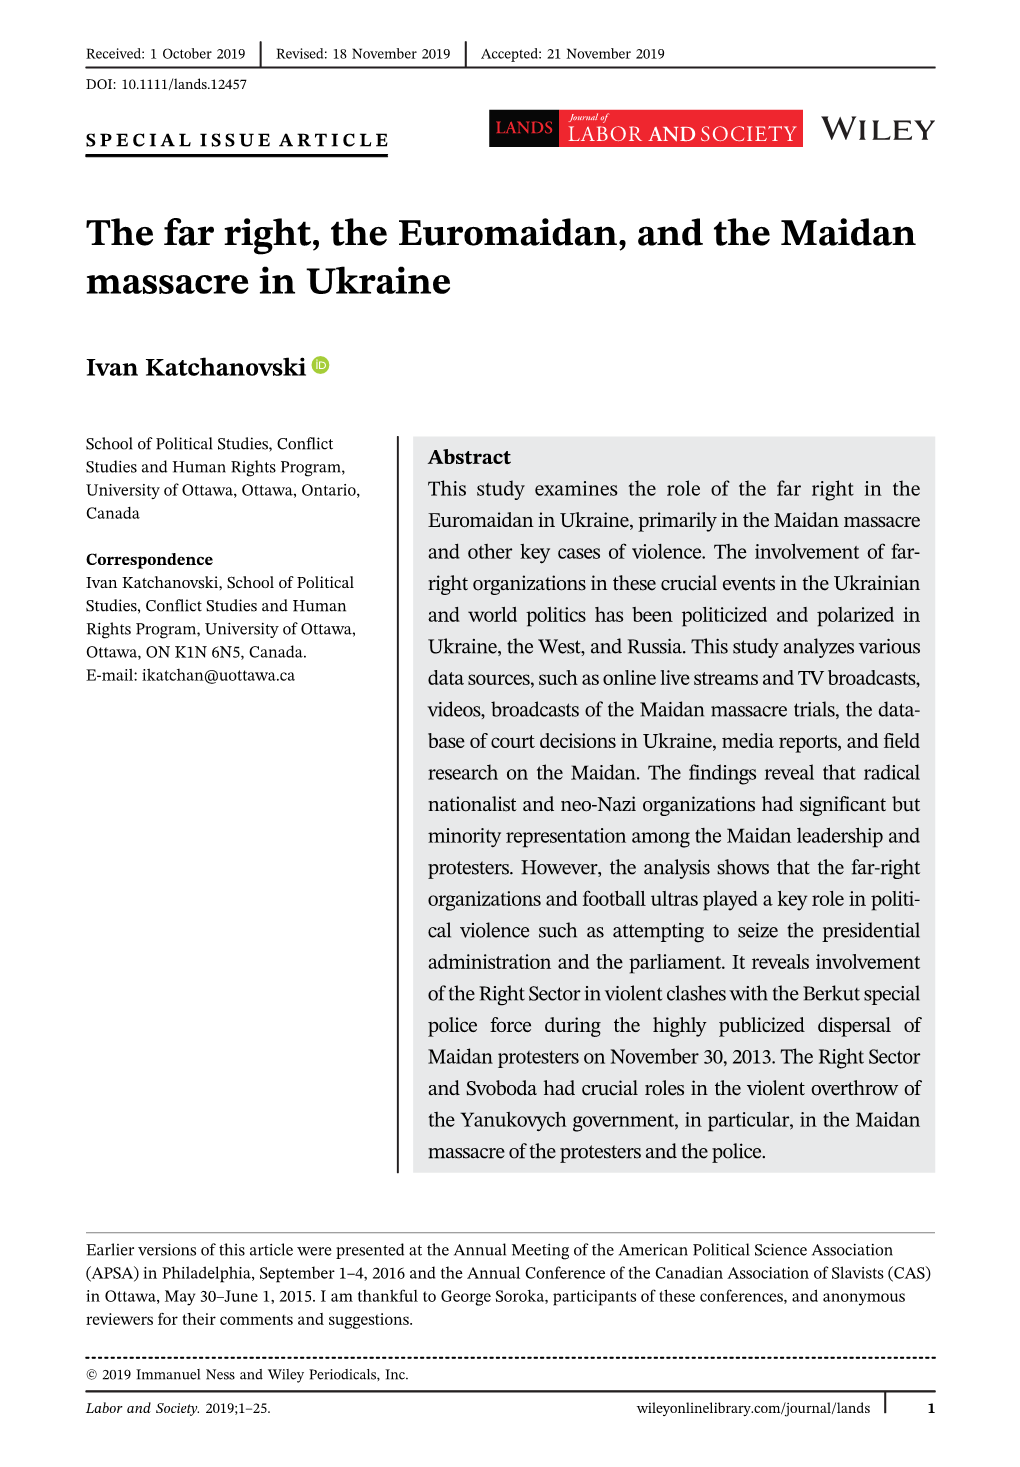 The Far Right, the Euromaidan, and the Maidan Massacre in Ukraine